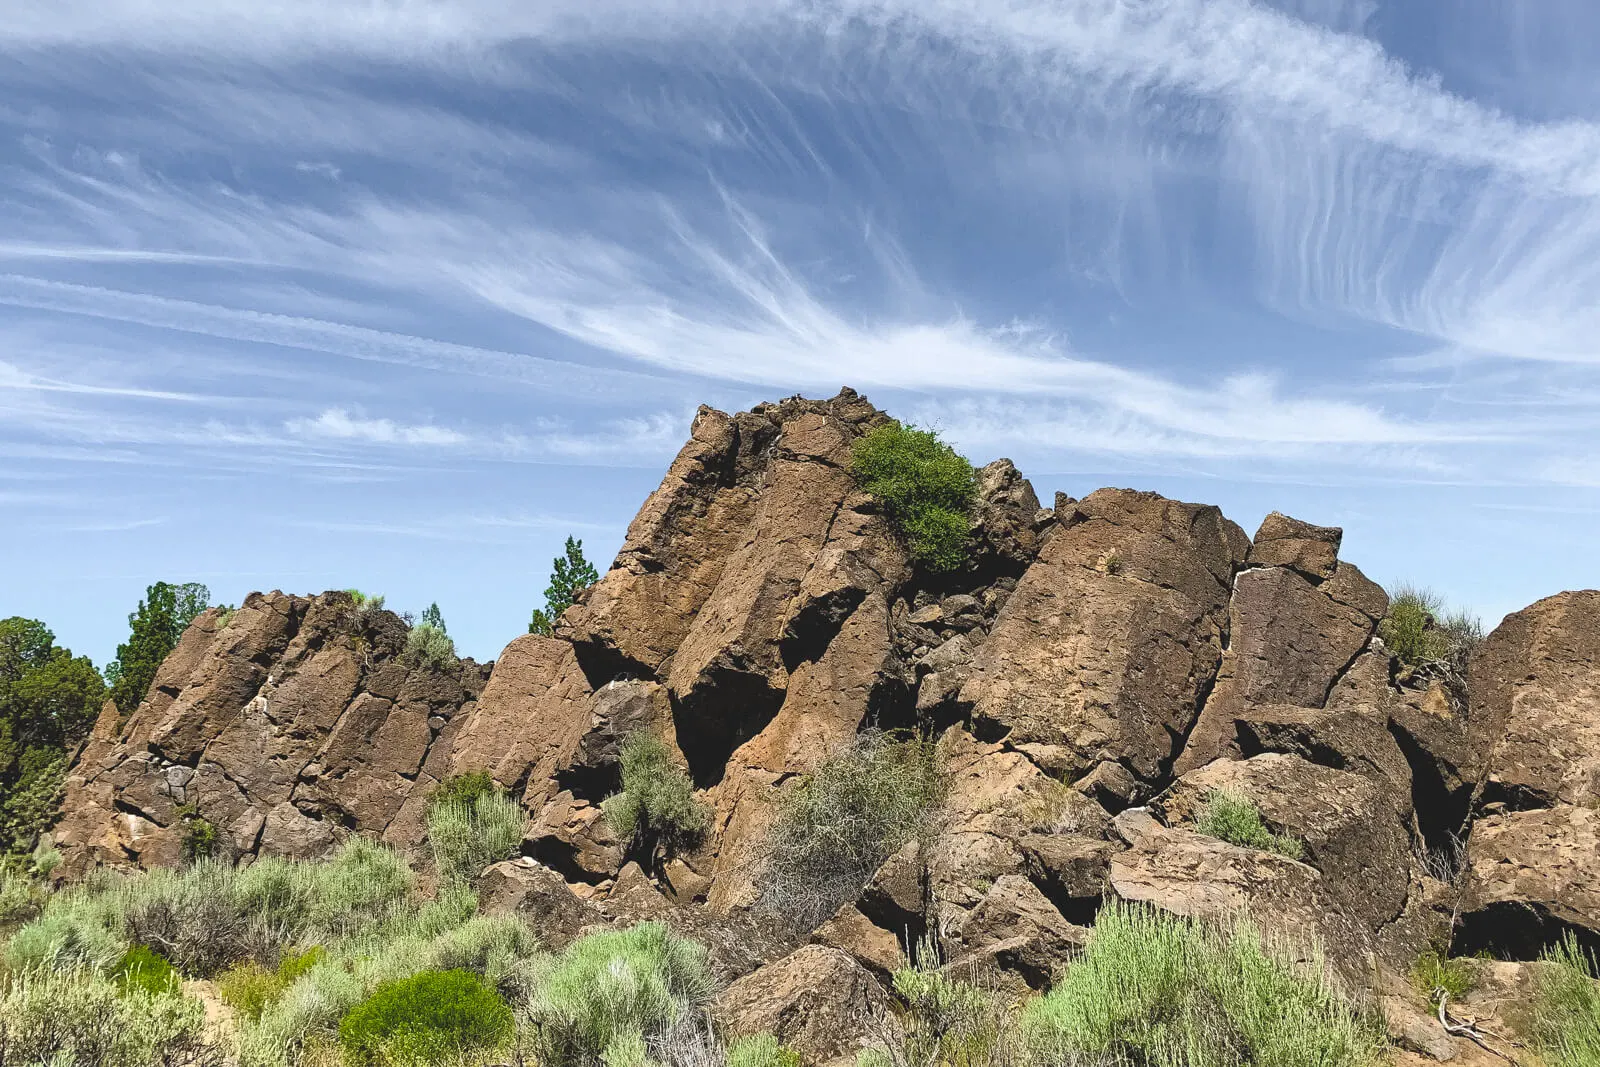 lava rocks stacked high in the Oregon Badlands